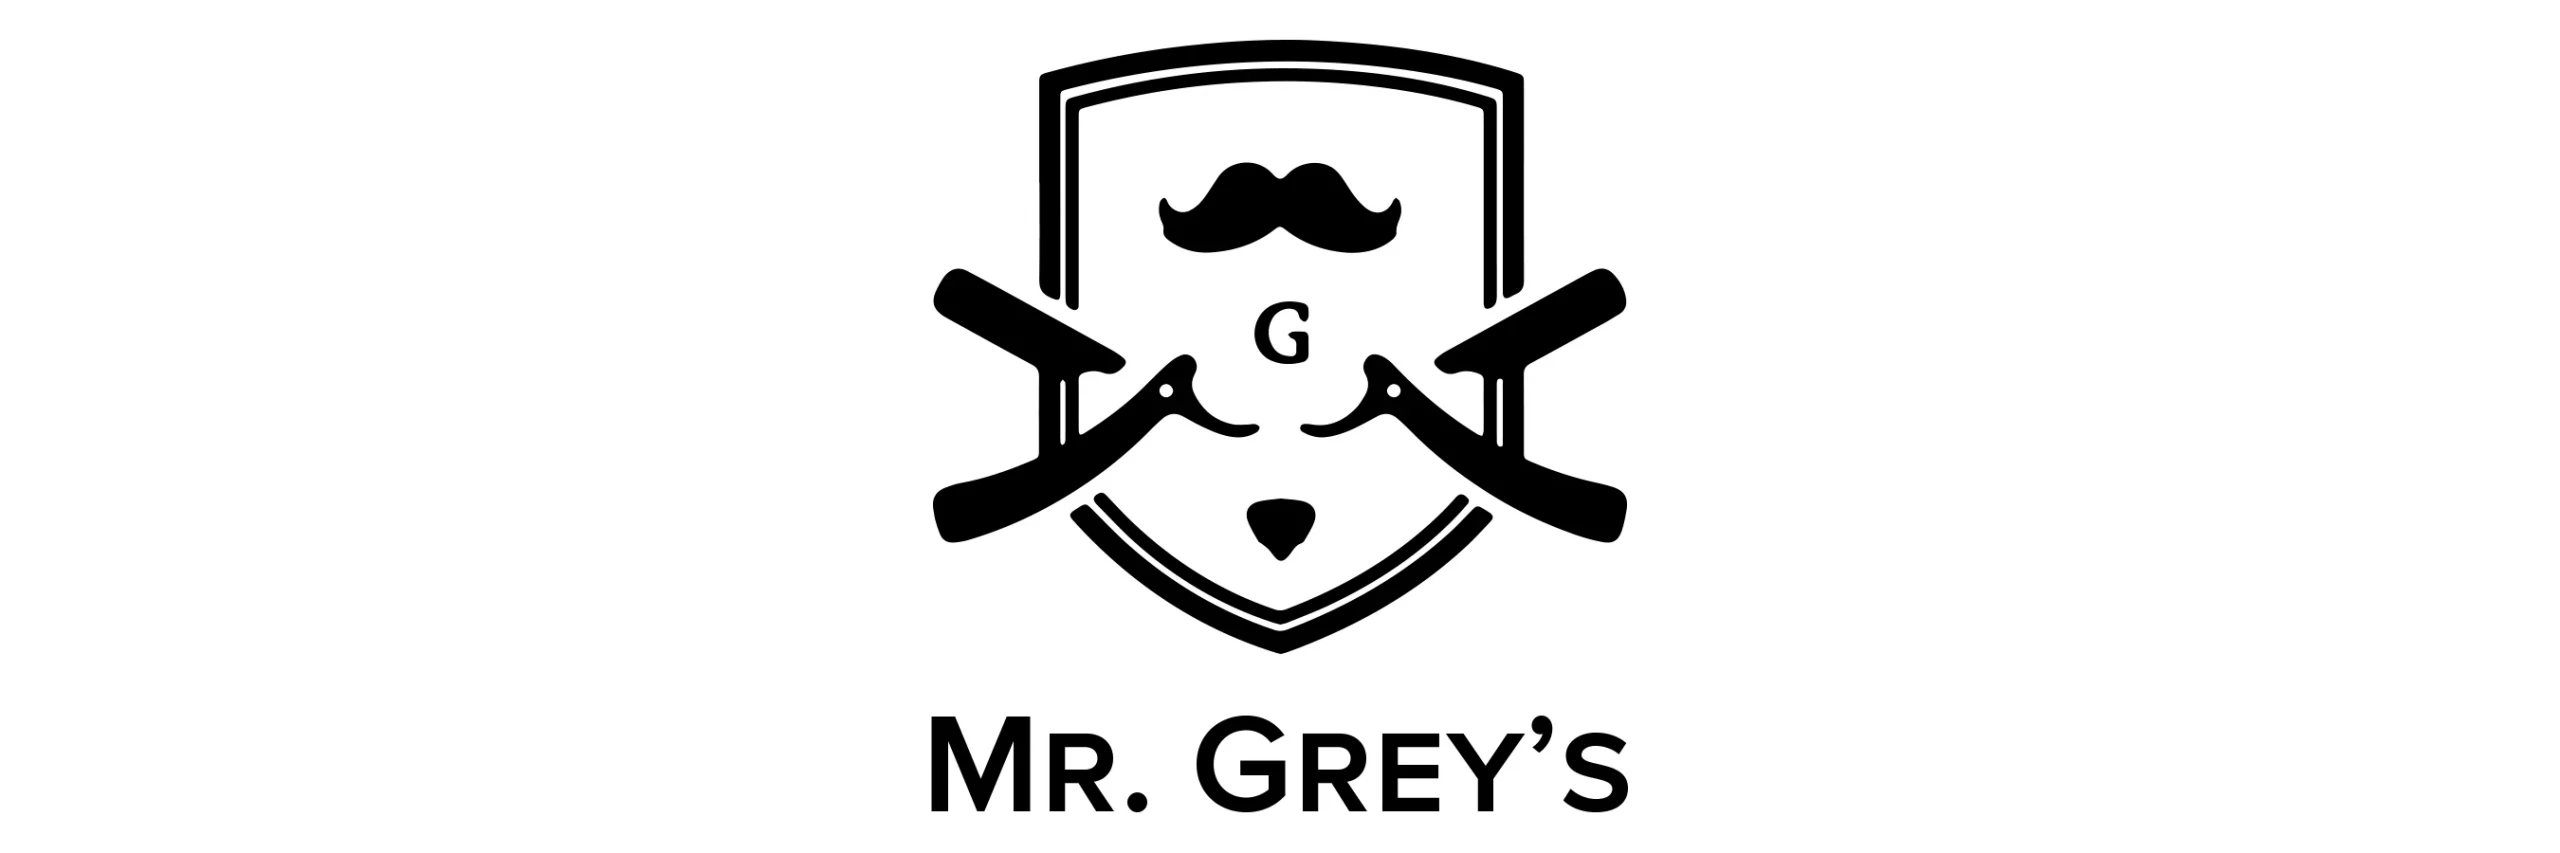 Mr. Grey's (Edwin Jagger stockist logo)